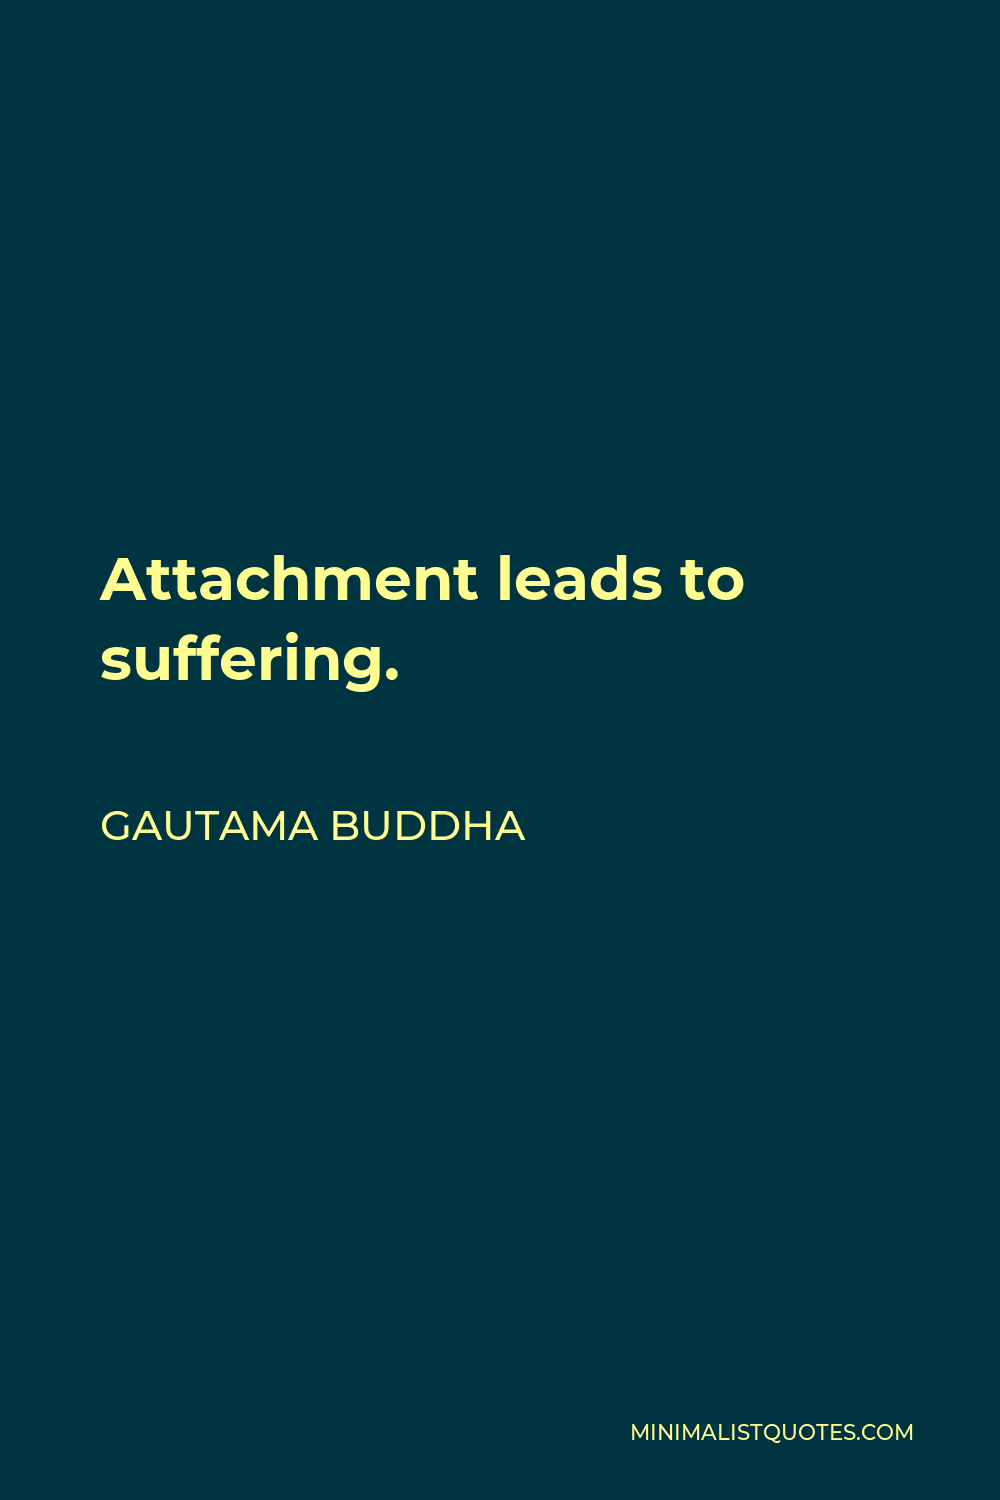 Gautama Buddha Quote - Attachment leads to suffering.